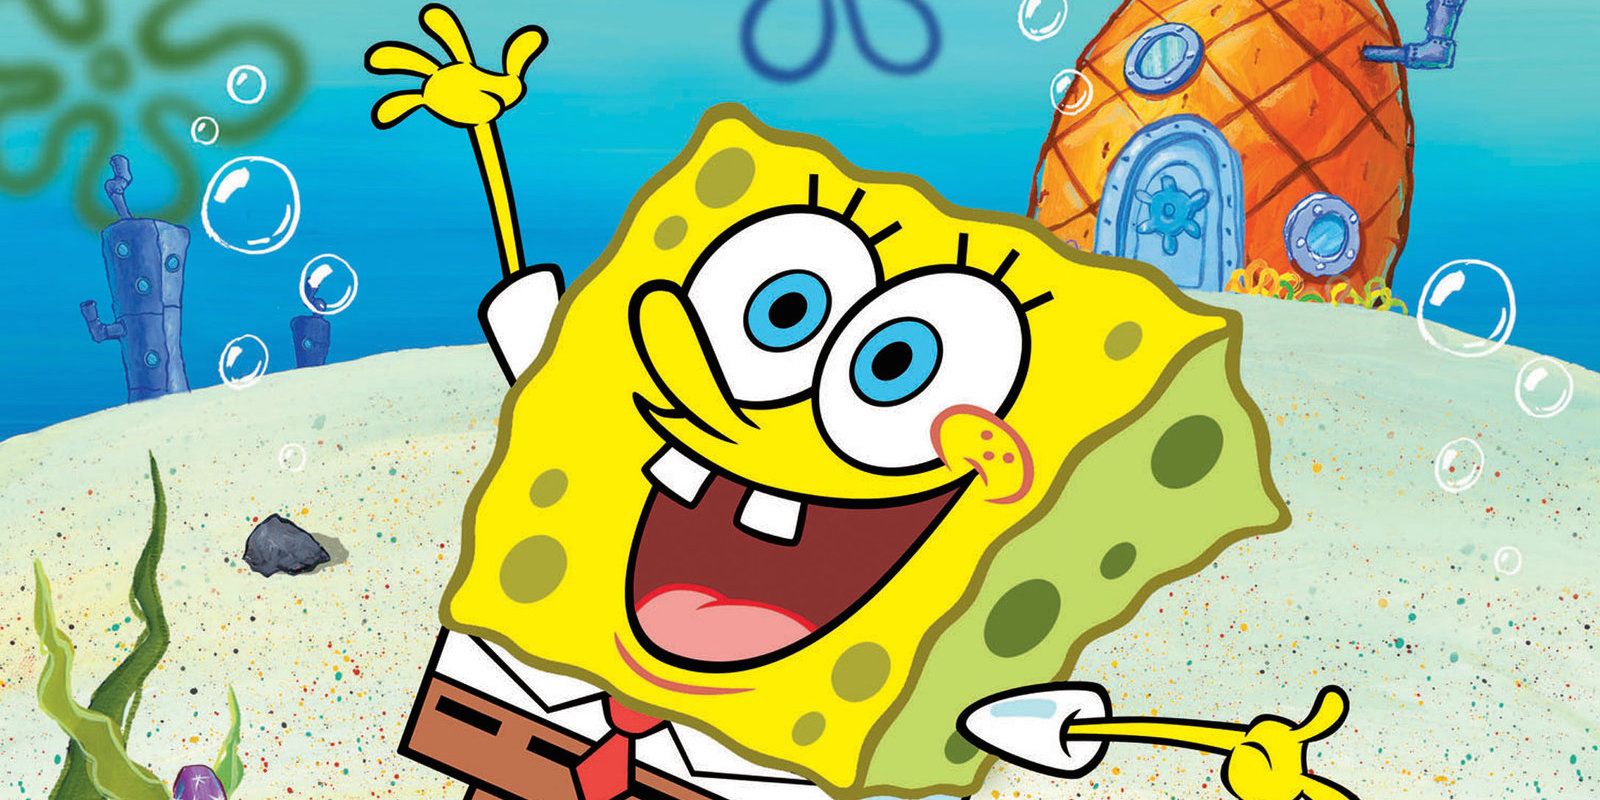 Nickelodeon's Spongebob Squarepants smiles